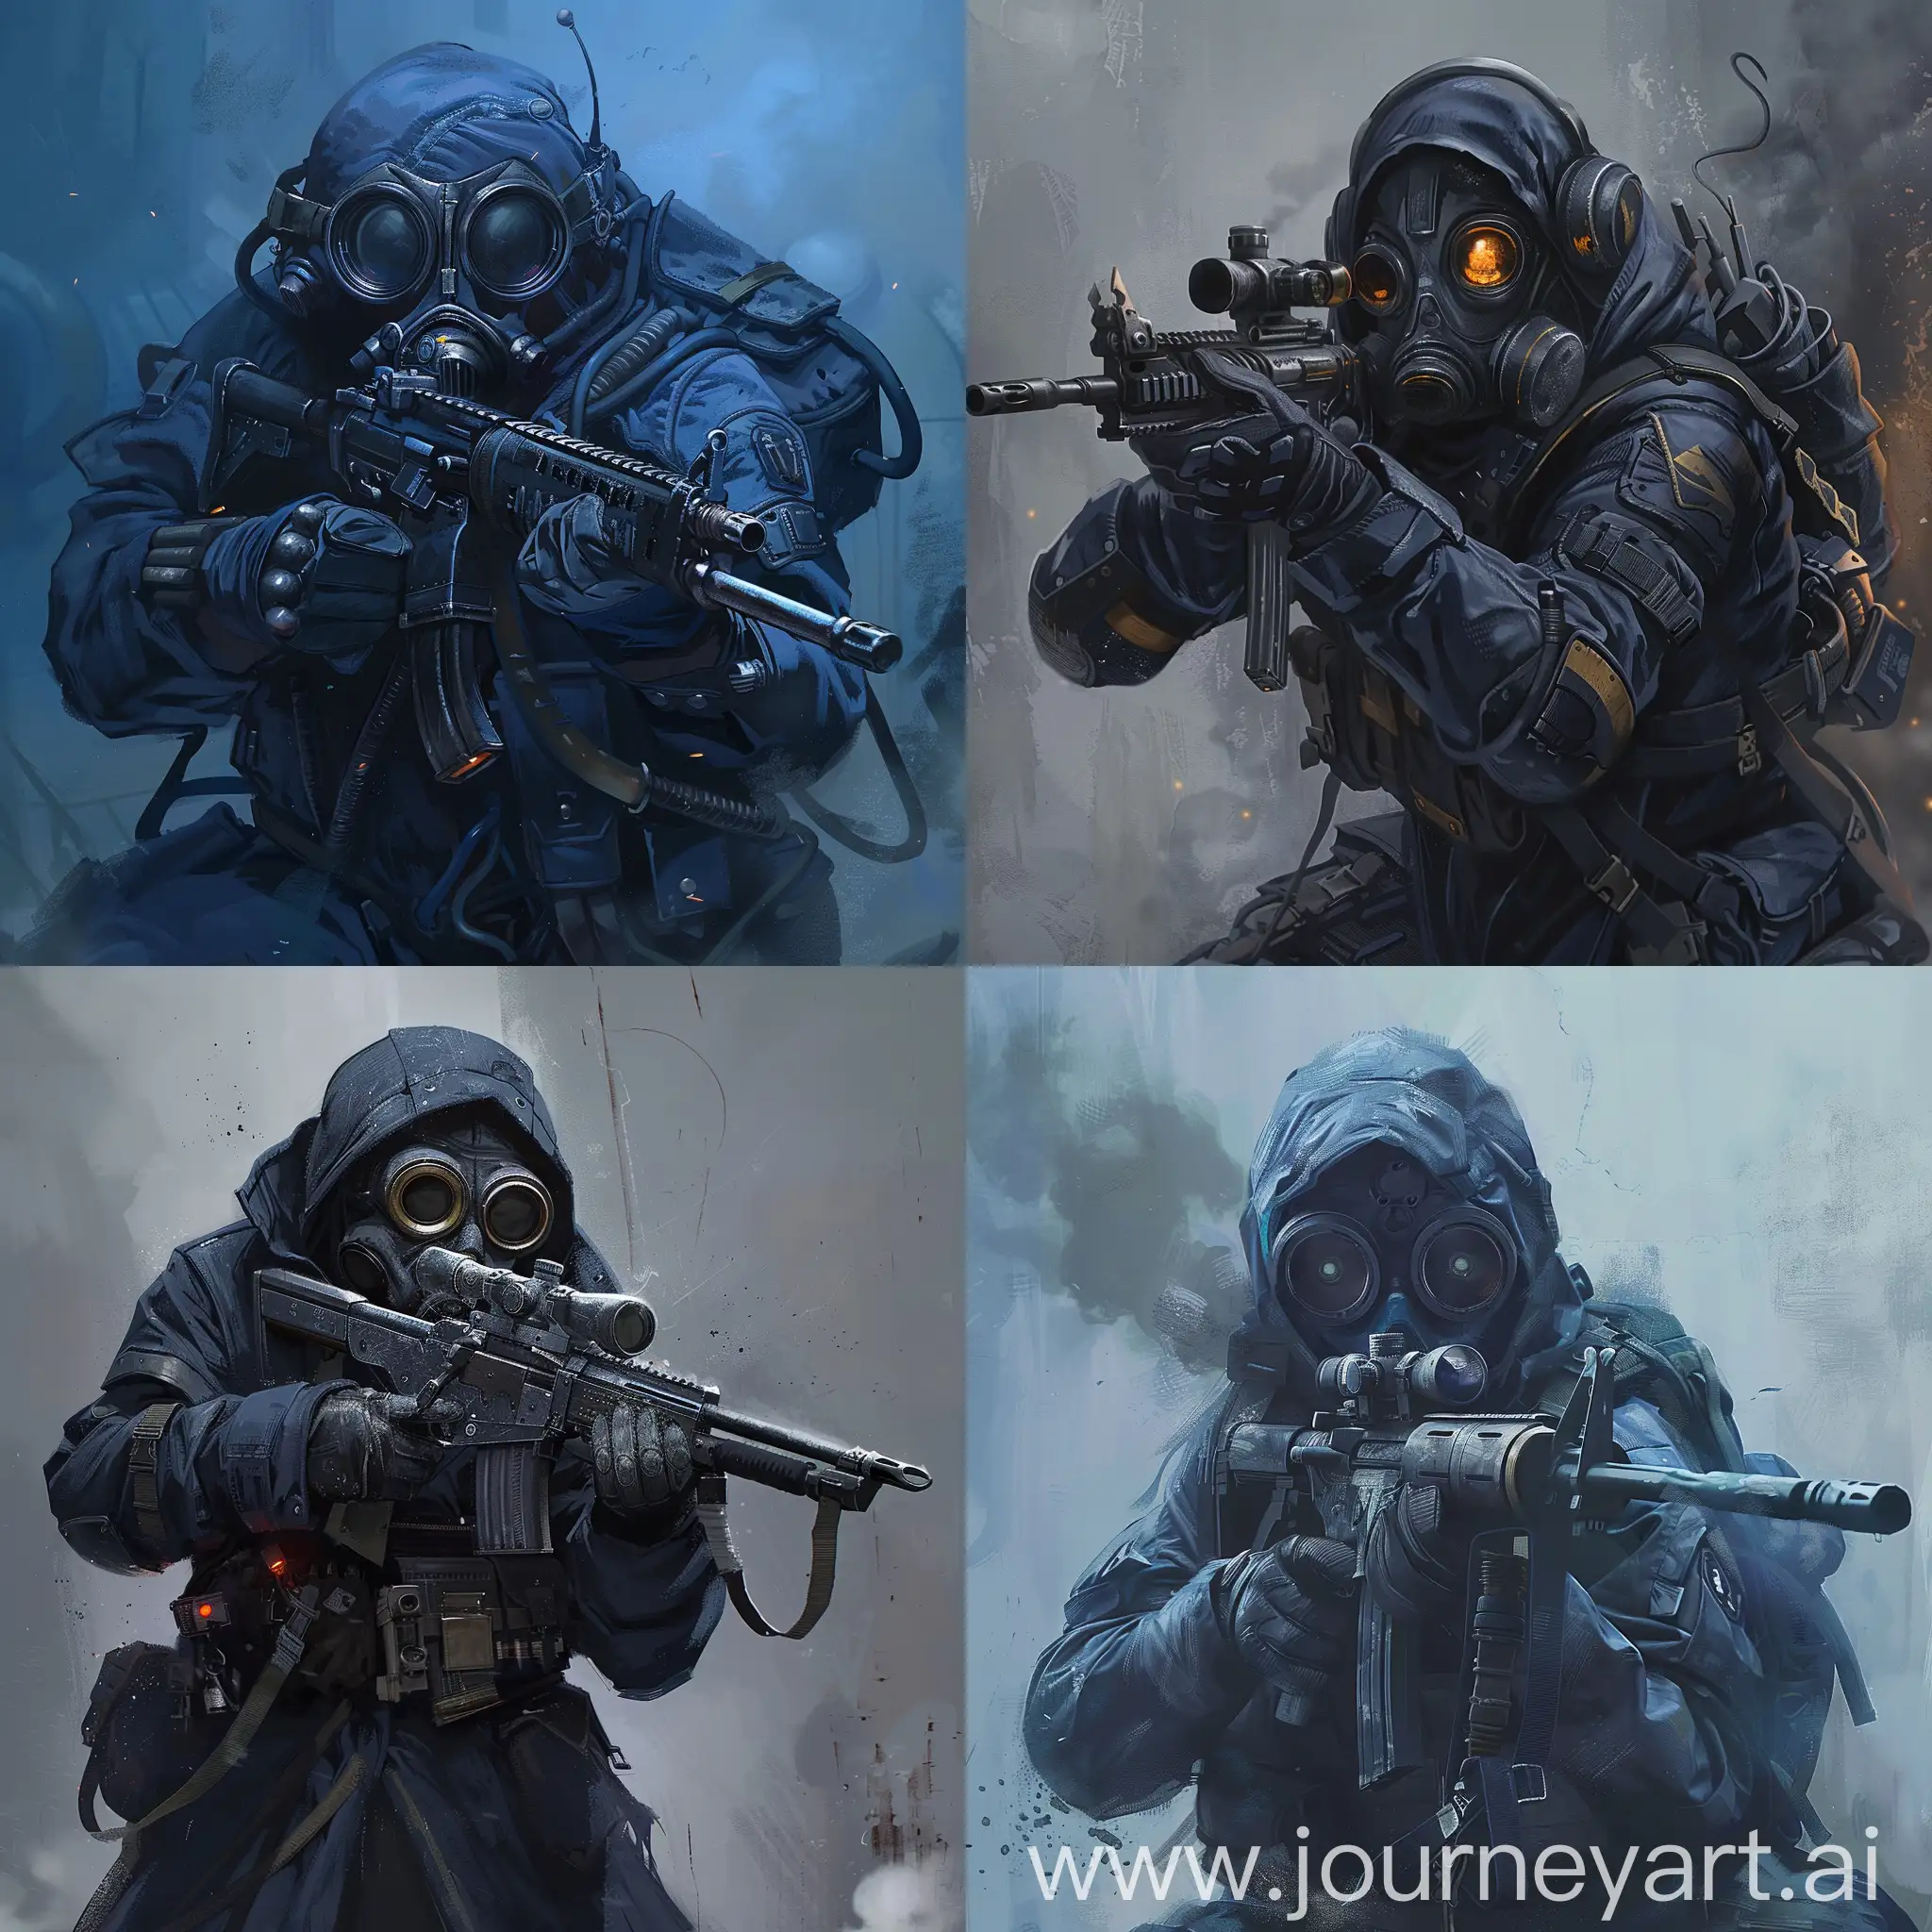 Mercenary-in-Gasmask-and-Juggernaut-Armor-Holding-Sniper-Rifle